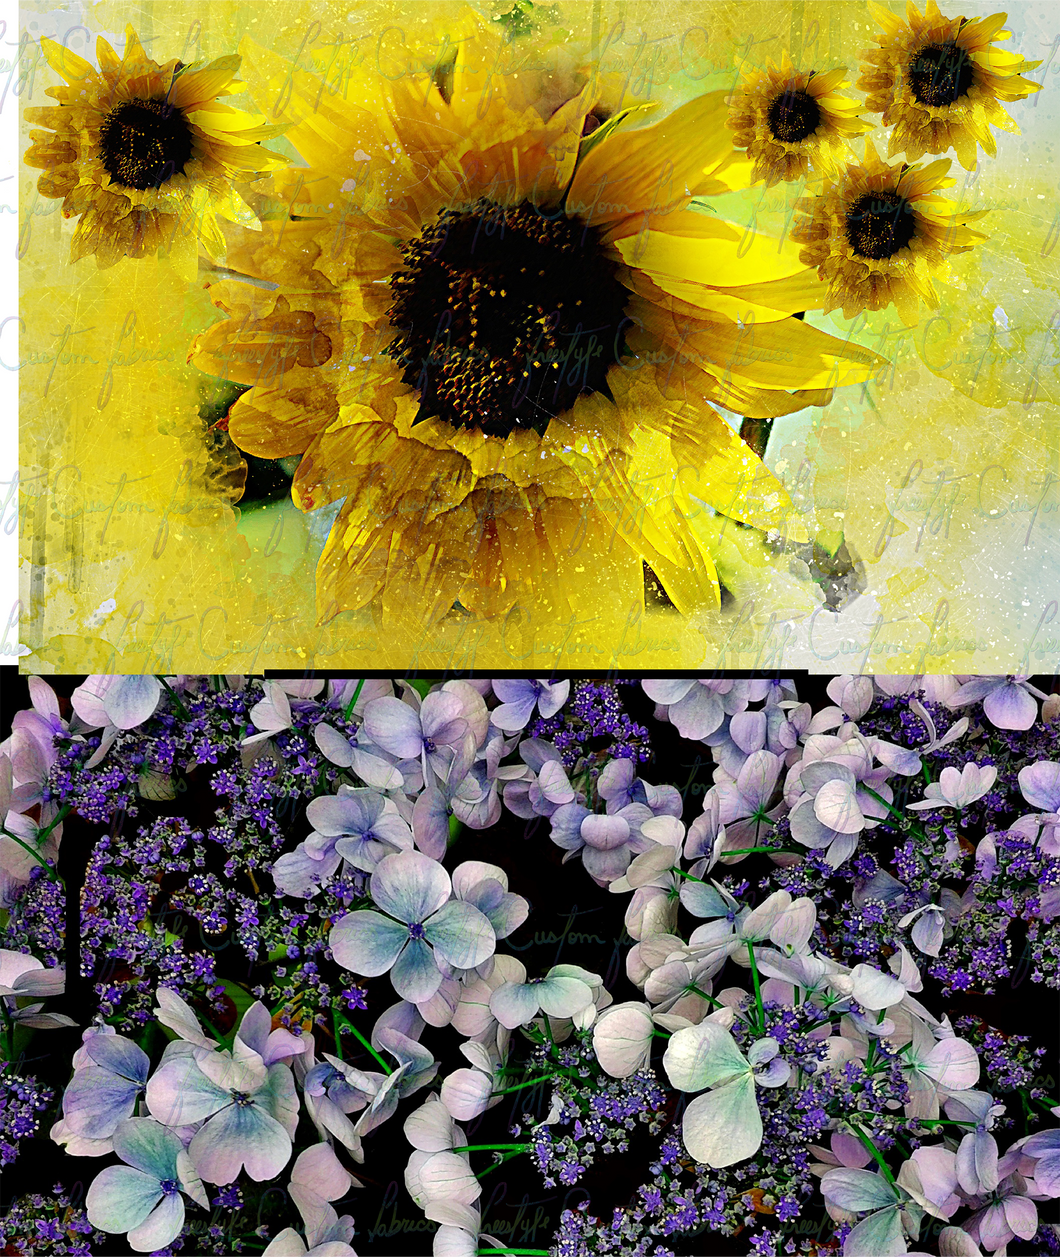 Sunflowers and Hydrangeas